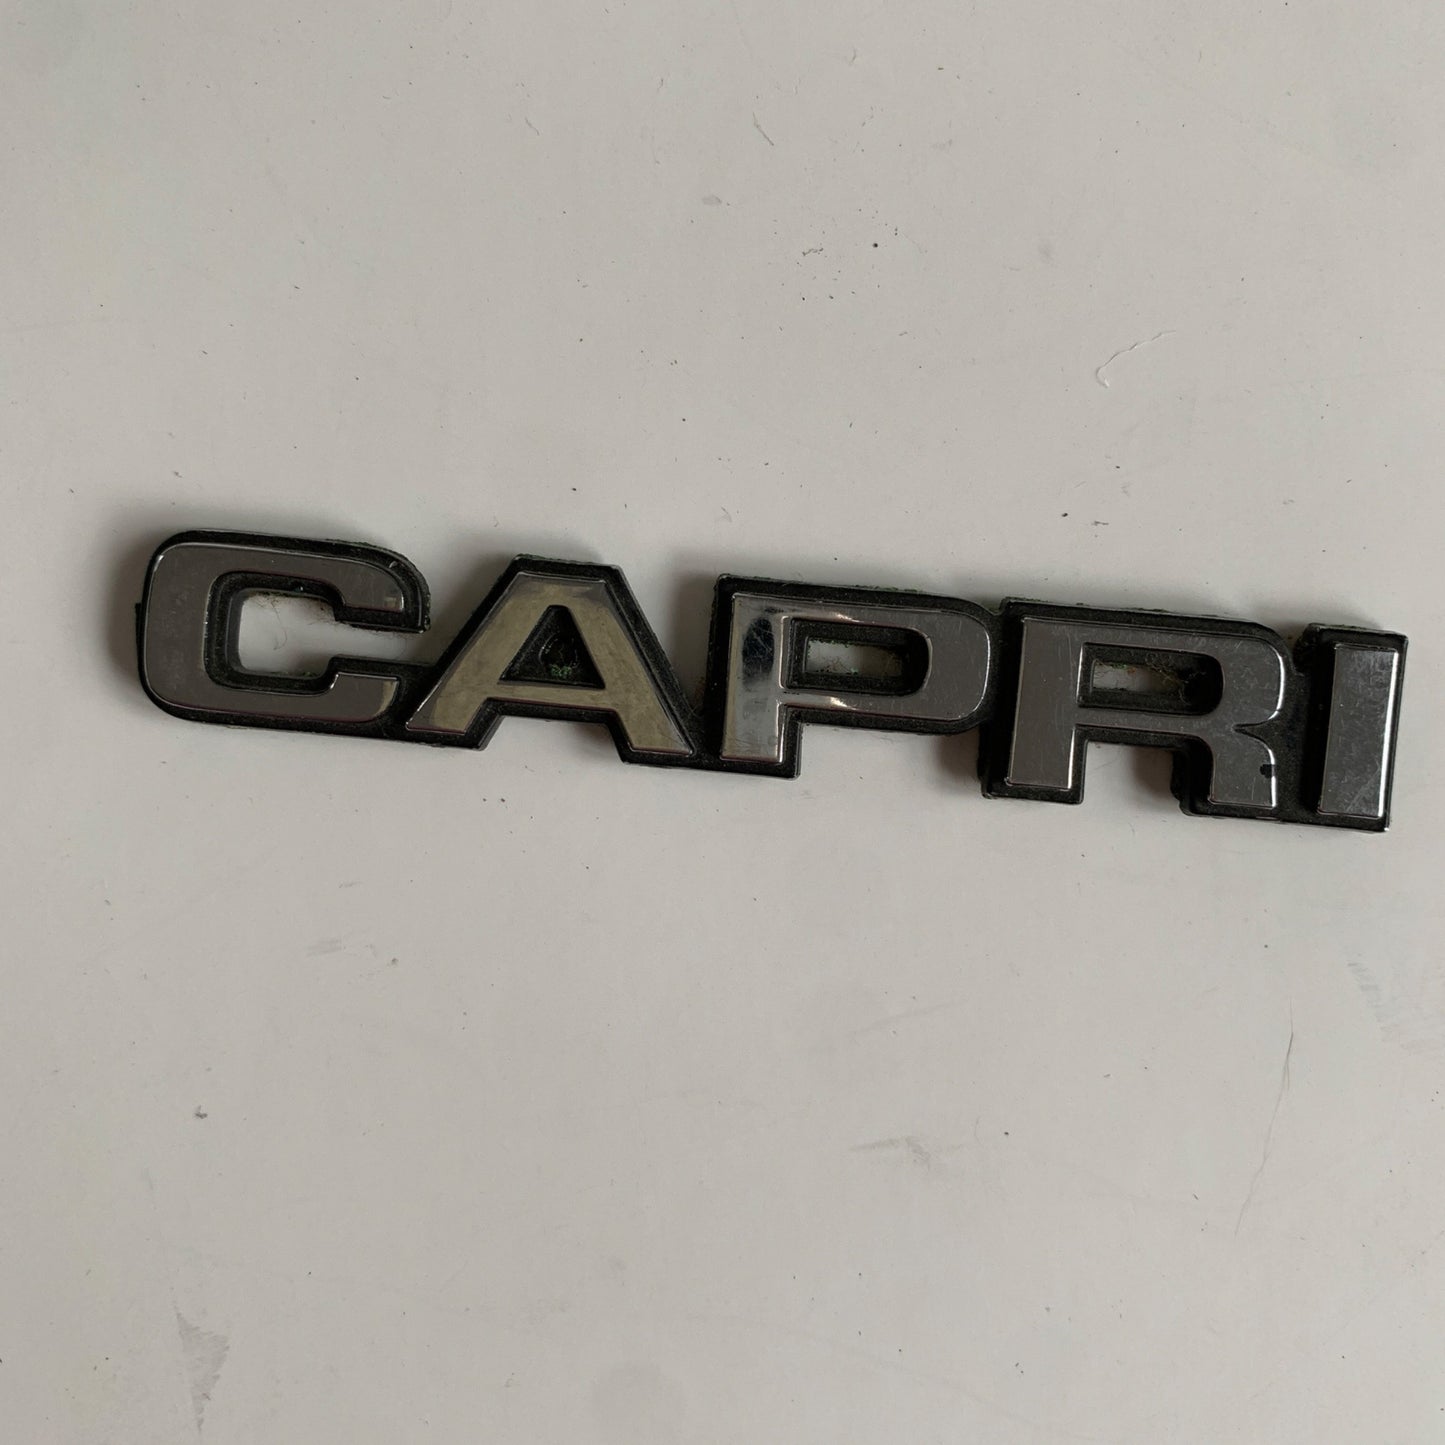 Vintage Mercury Capri Emblem Script Ford OEM